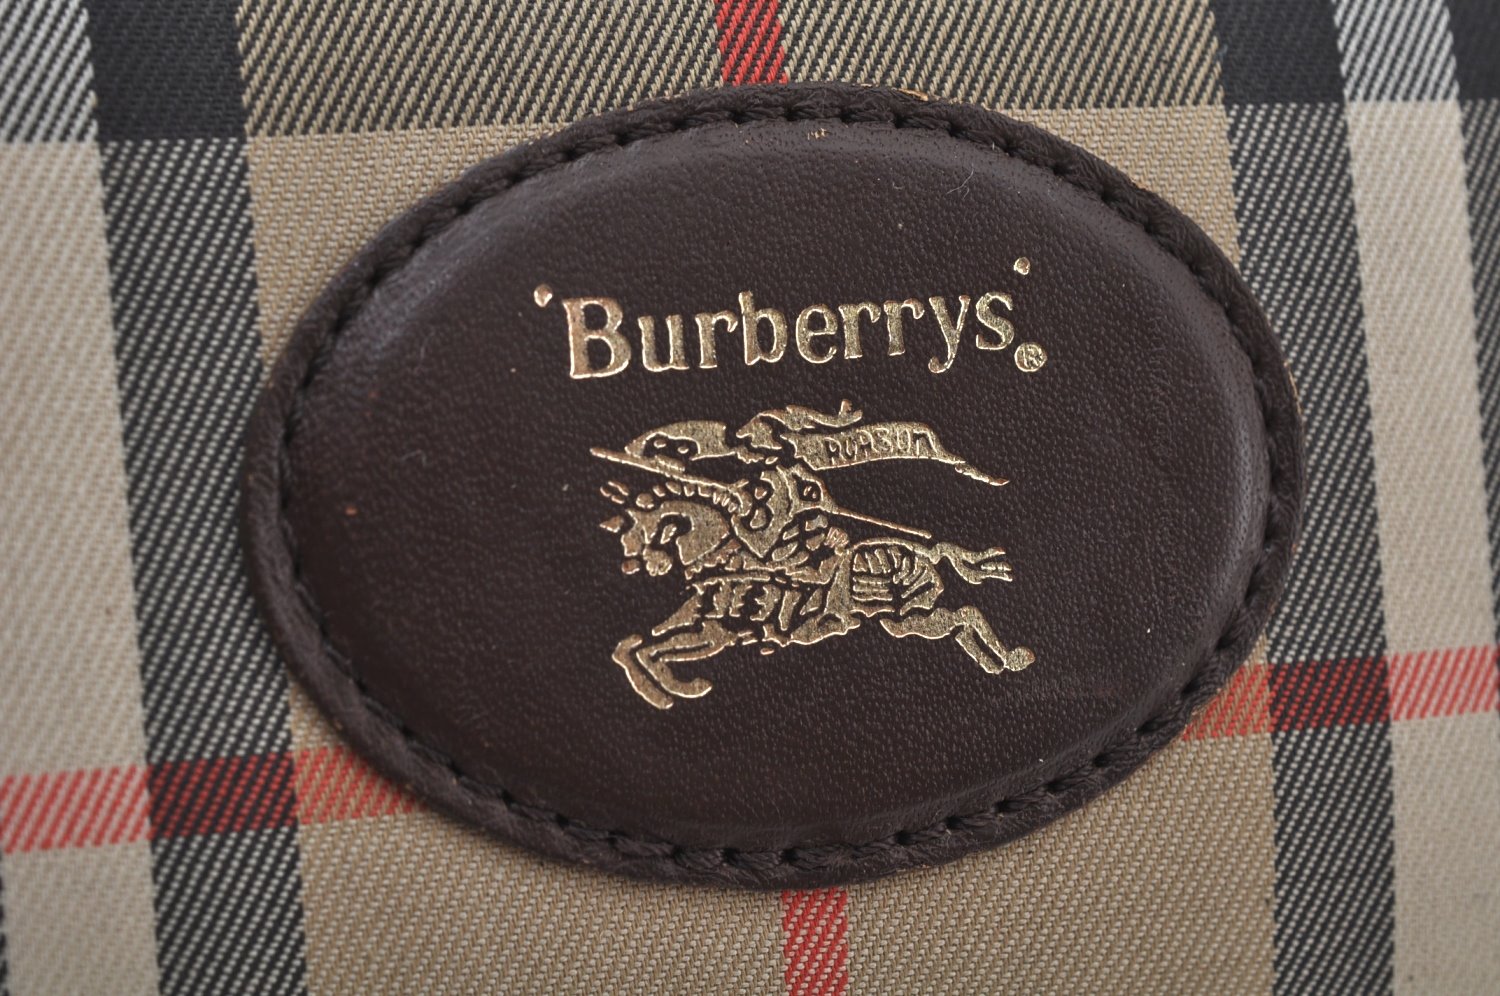 Authentic Burberrys Vintage Check Canvas Travel Boston Bag Brown Beige K9796